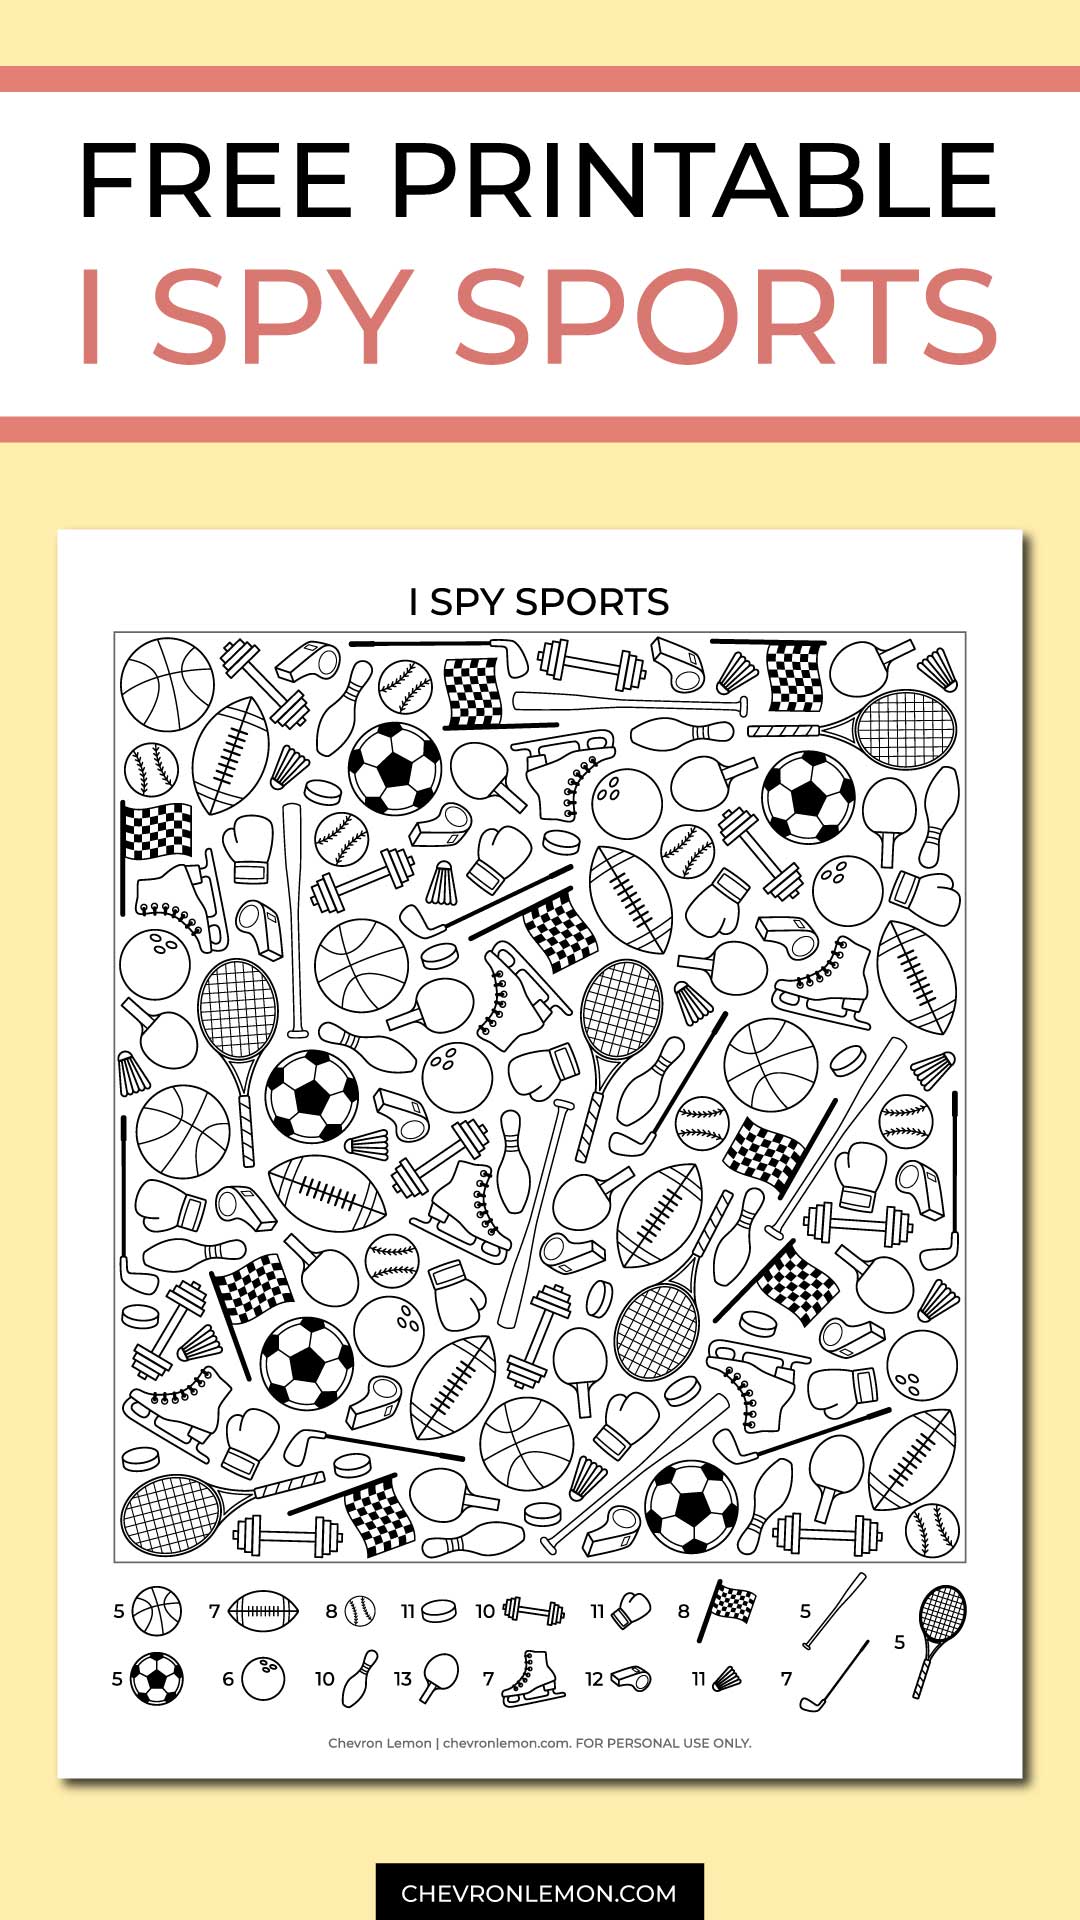 I spy sports printable game